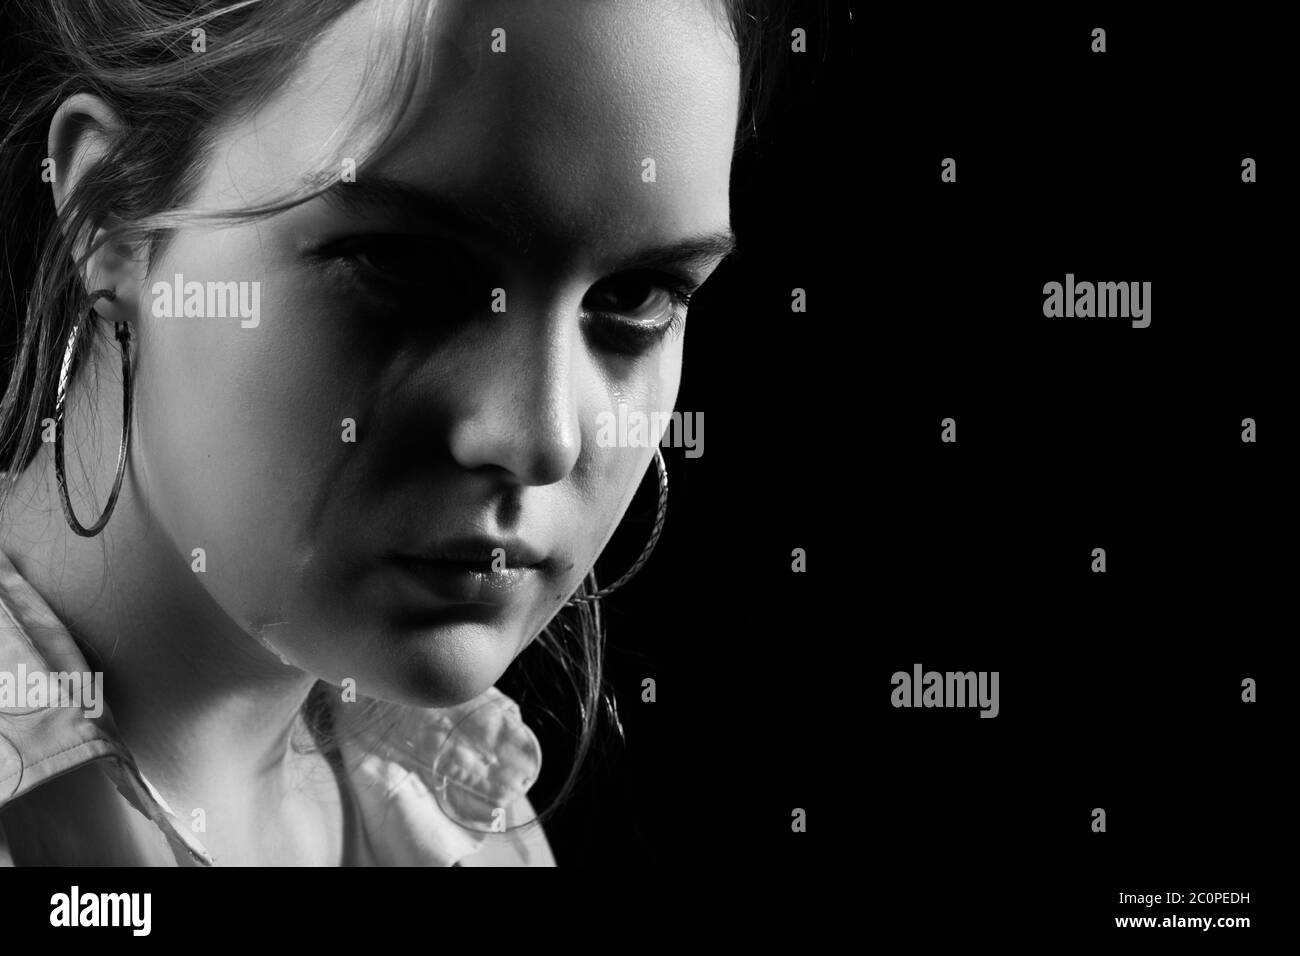 sad woman crying, looking at camera on black background, closeup portrait, monochrome Stock Photo